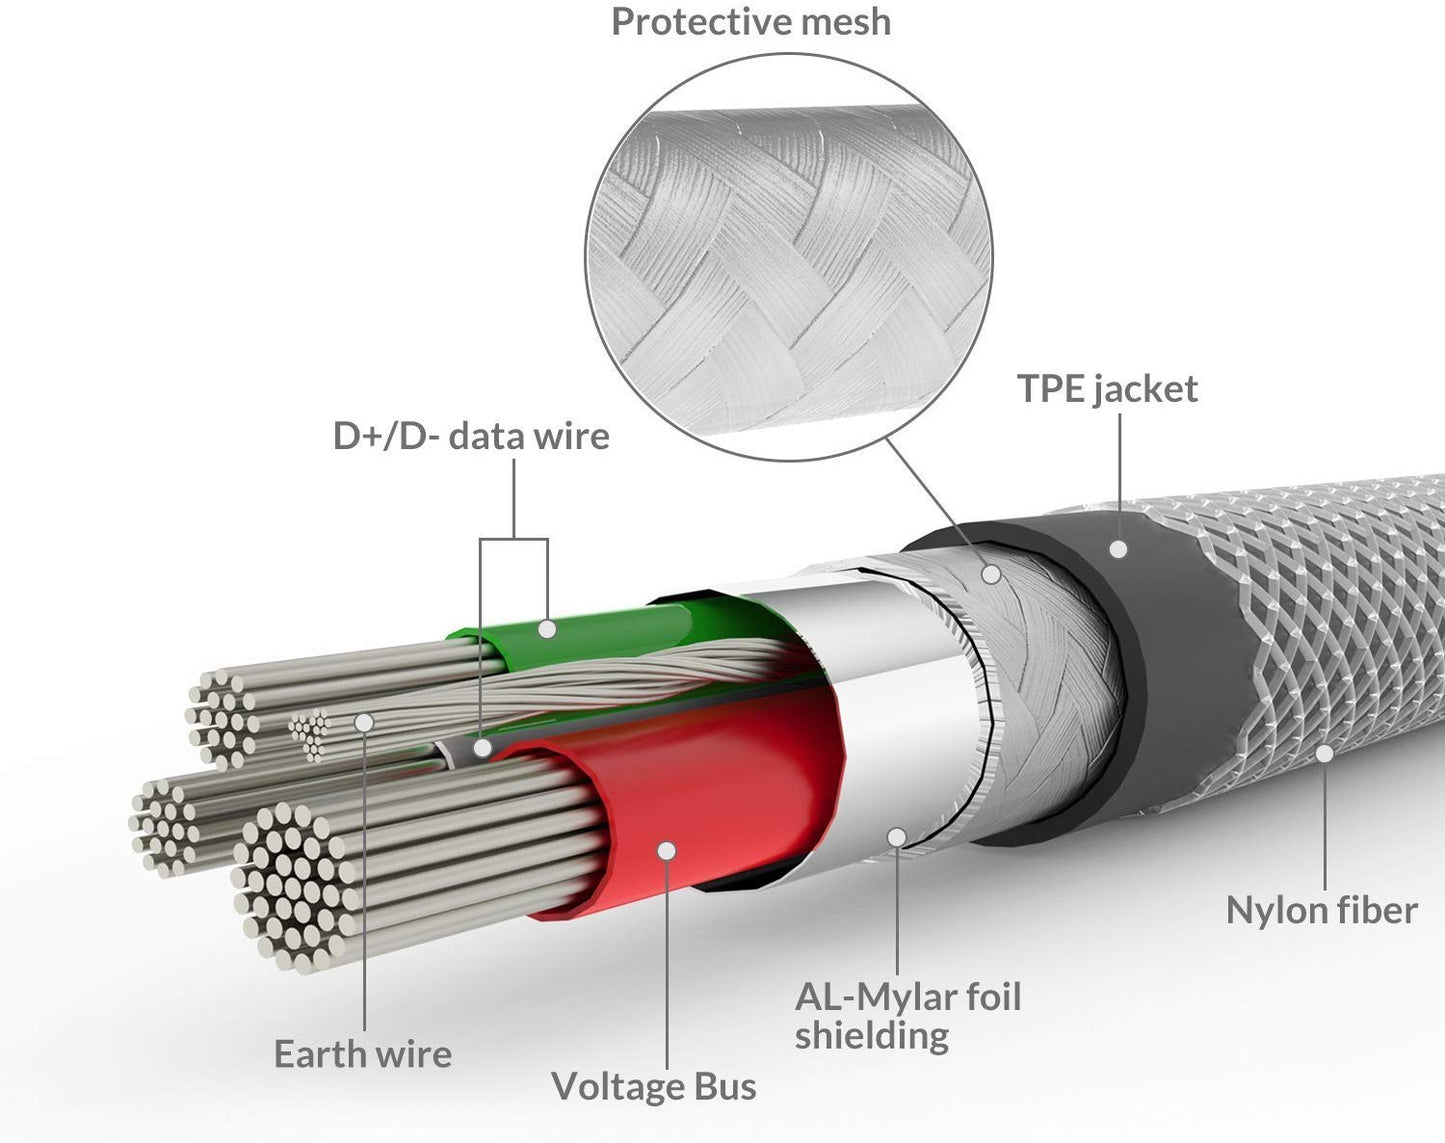 iVoltaa MFi Certified Braided Lightning Cable - (6 Feet - 1.8M)